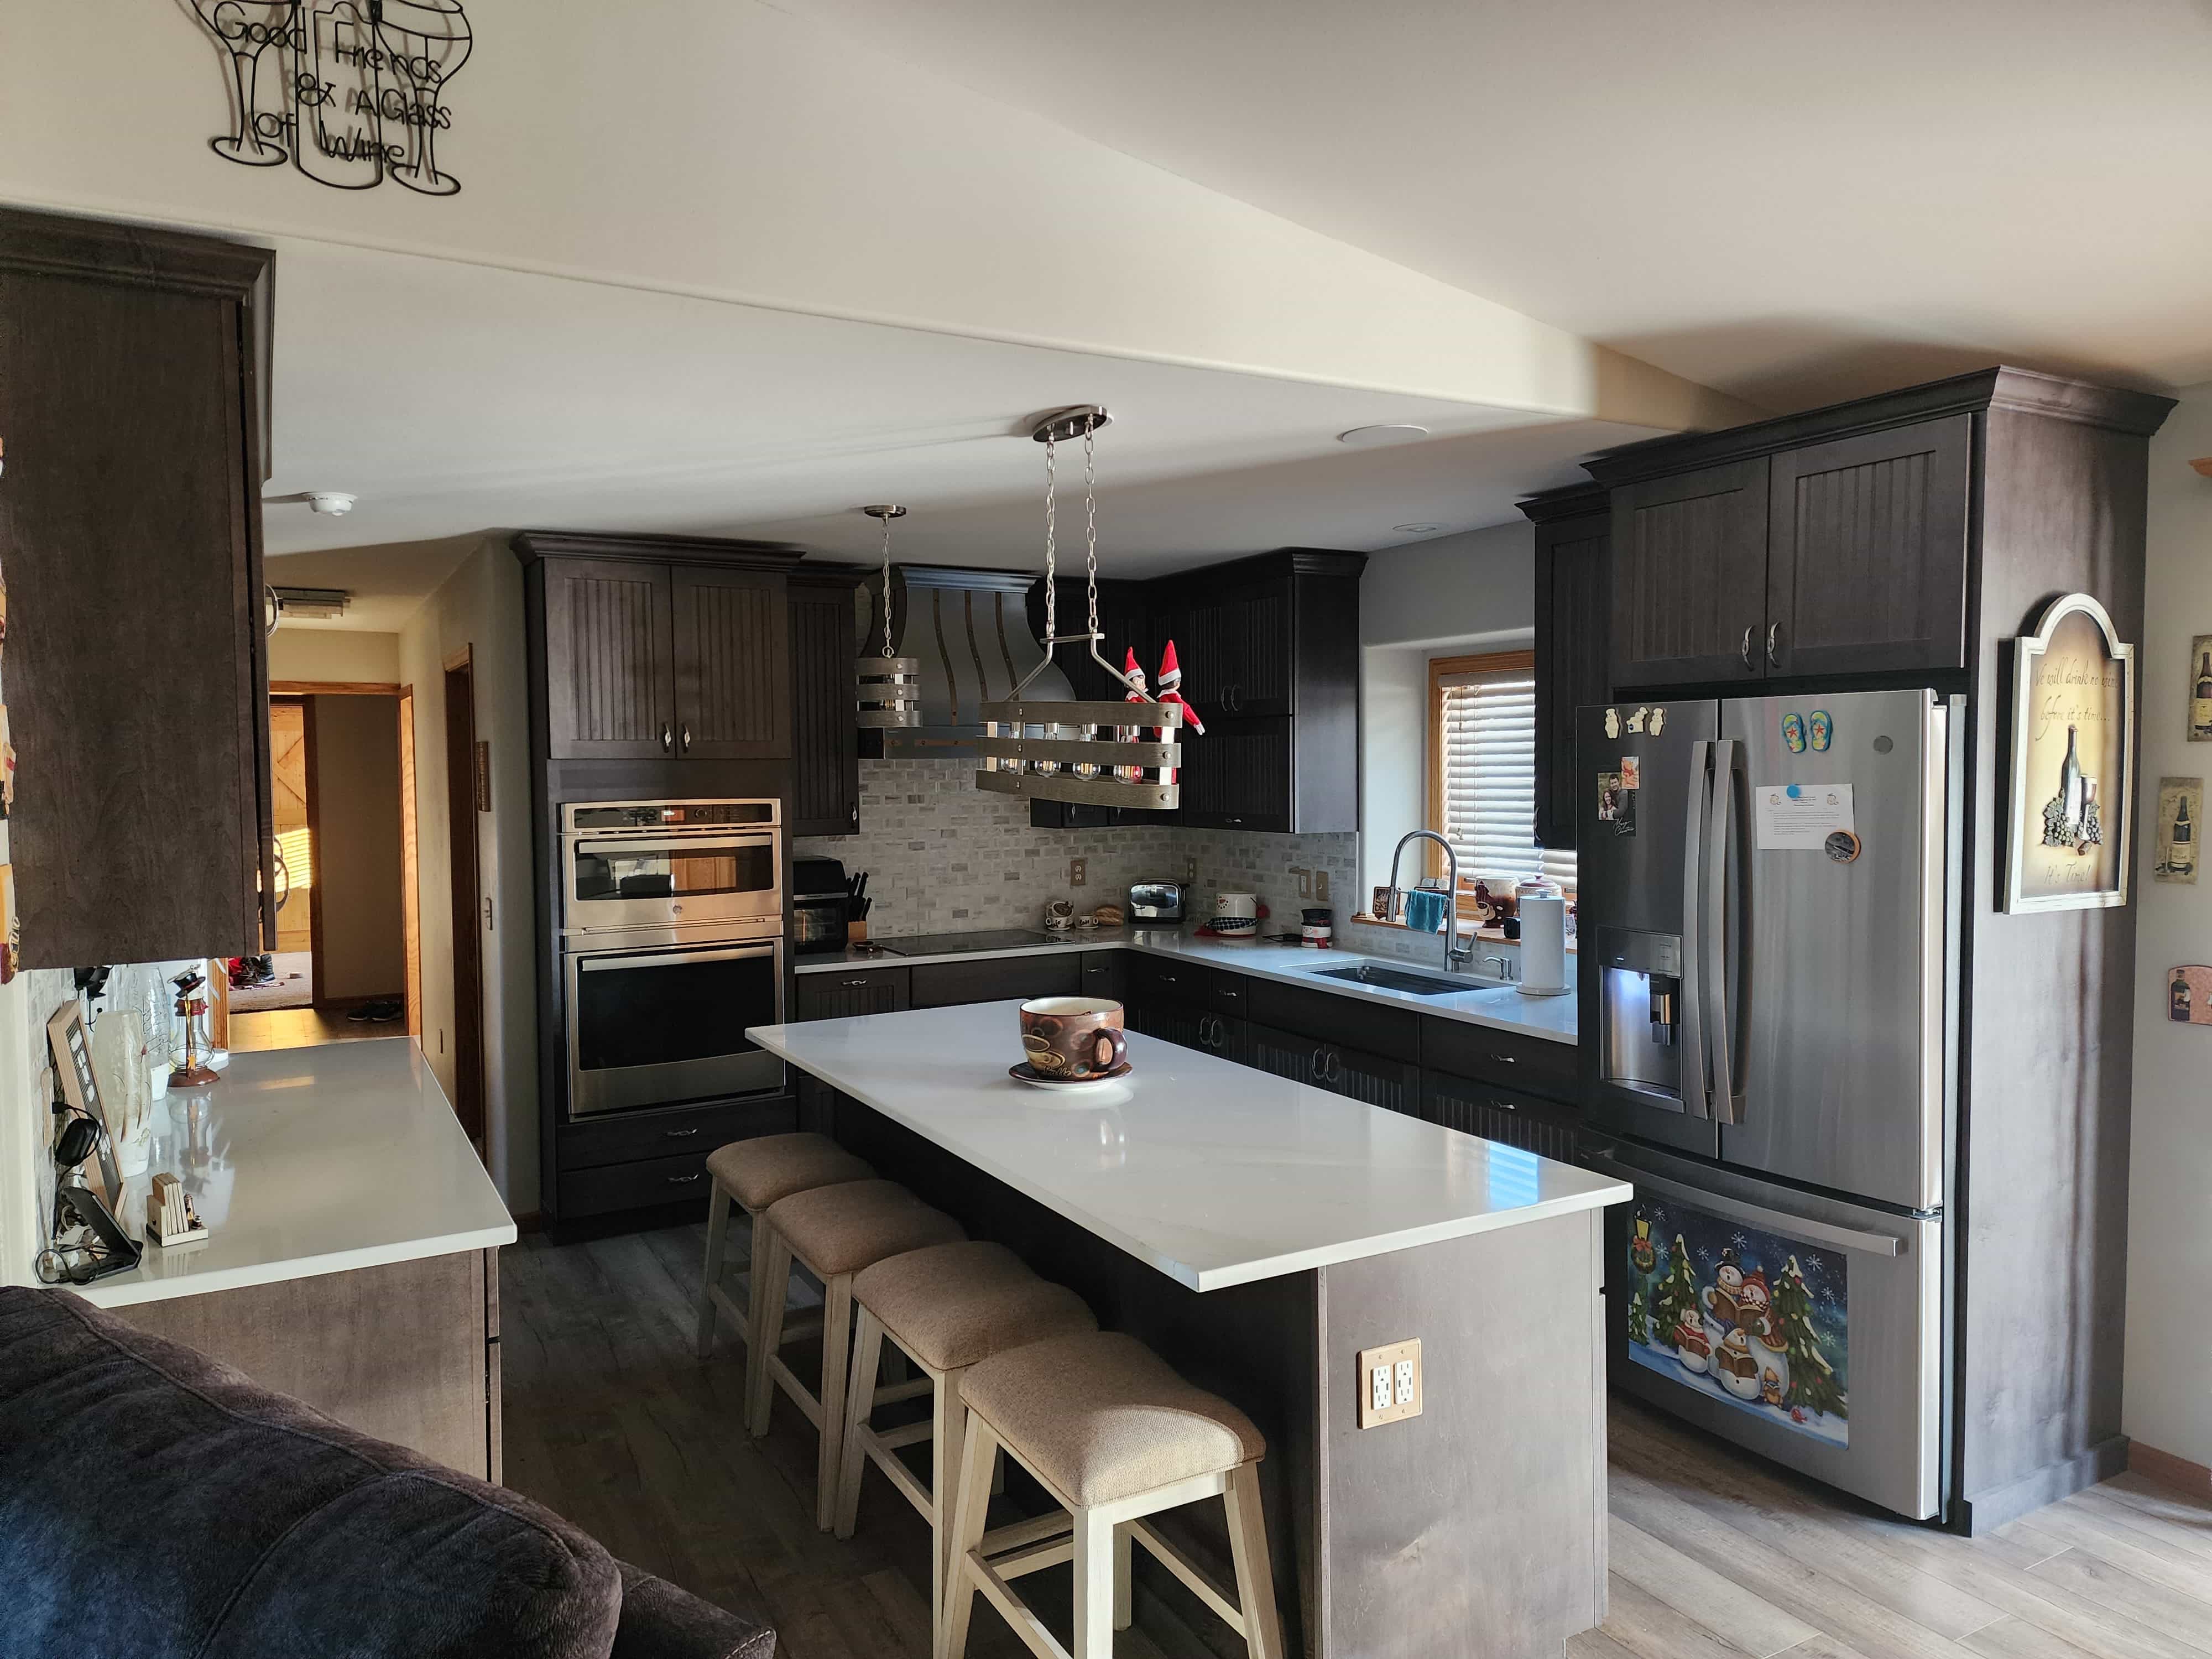 Stunning traditional kitchen design idea with wood kitchen cabinets, white kitchen countertops, captivating brick backsplash